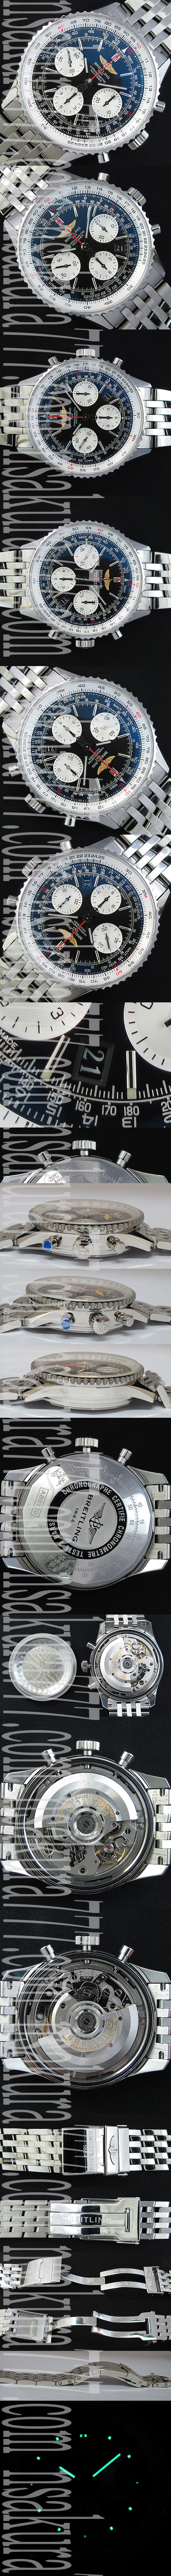 Breitling navitimer 01(JF工場) 7750B-2ムーブメント 28800振動 自動巻き カレンダー